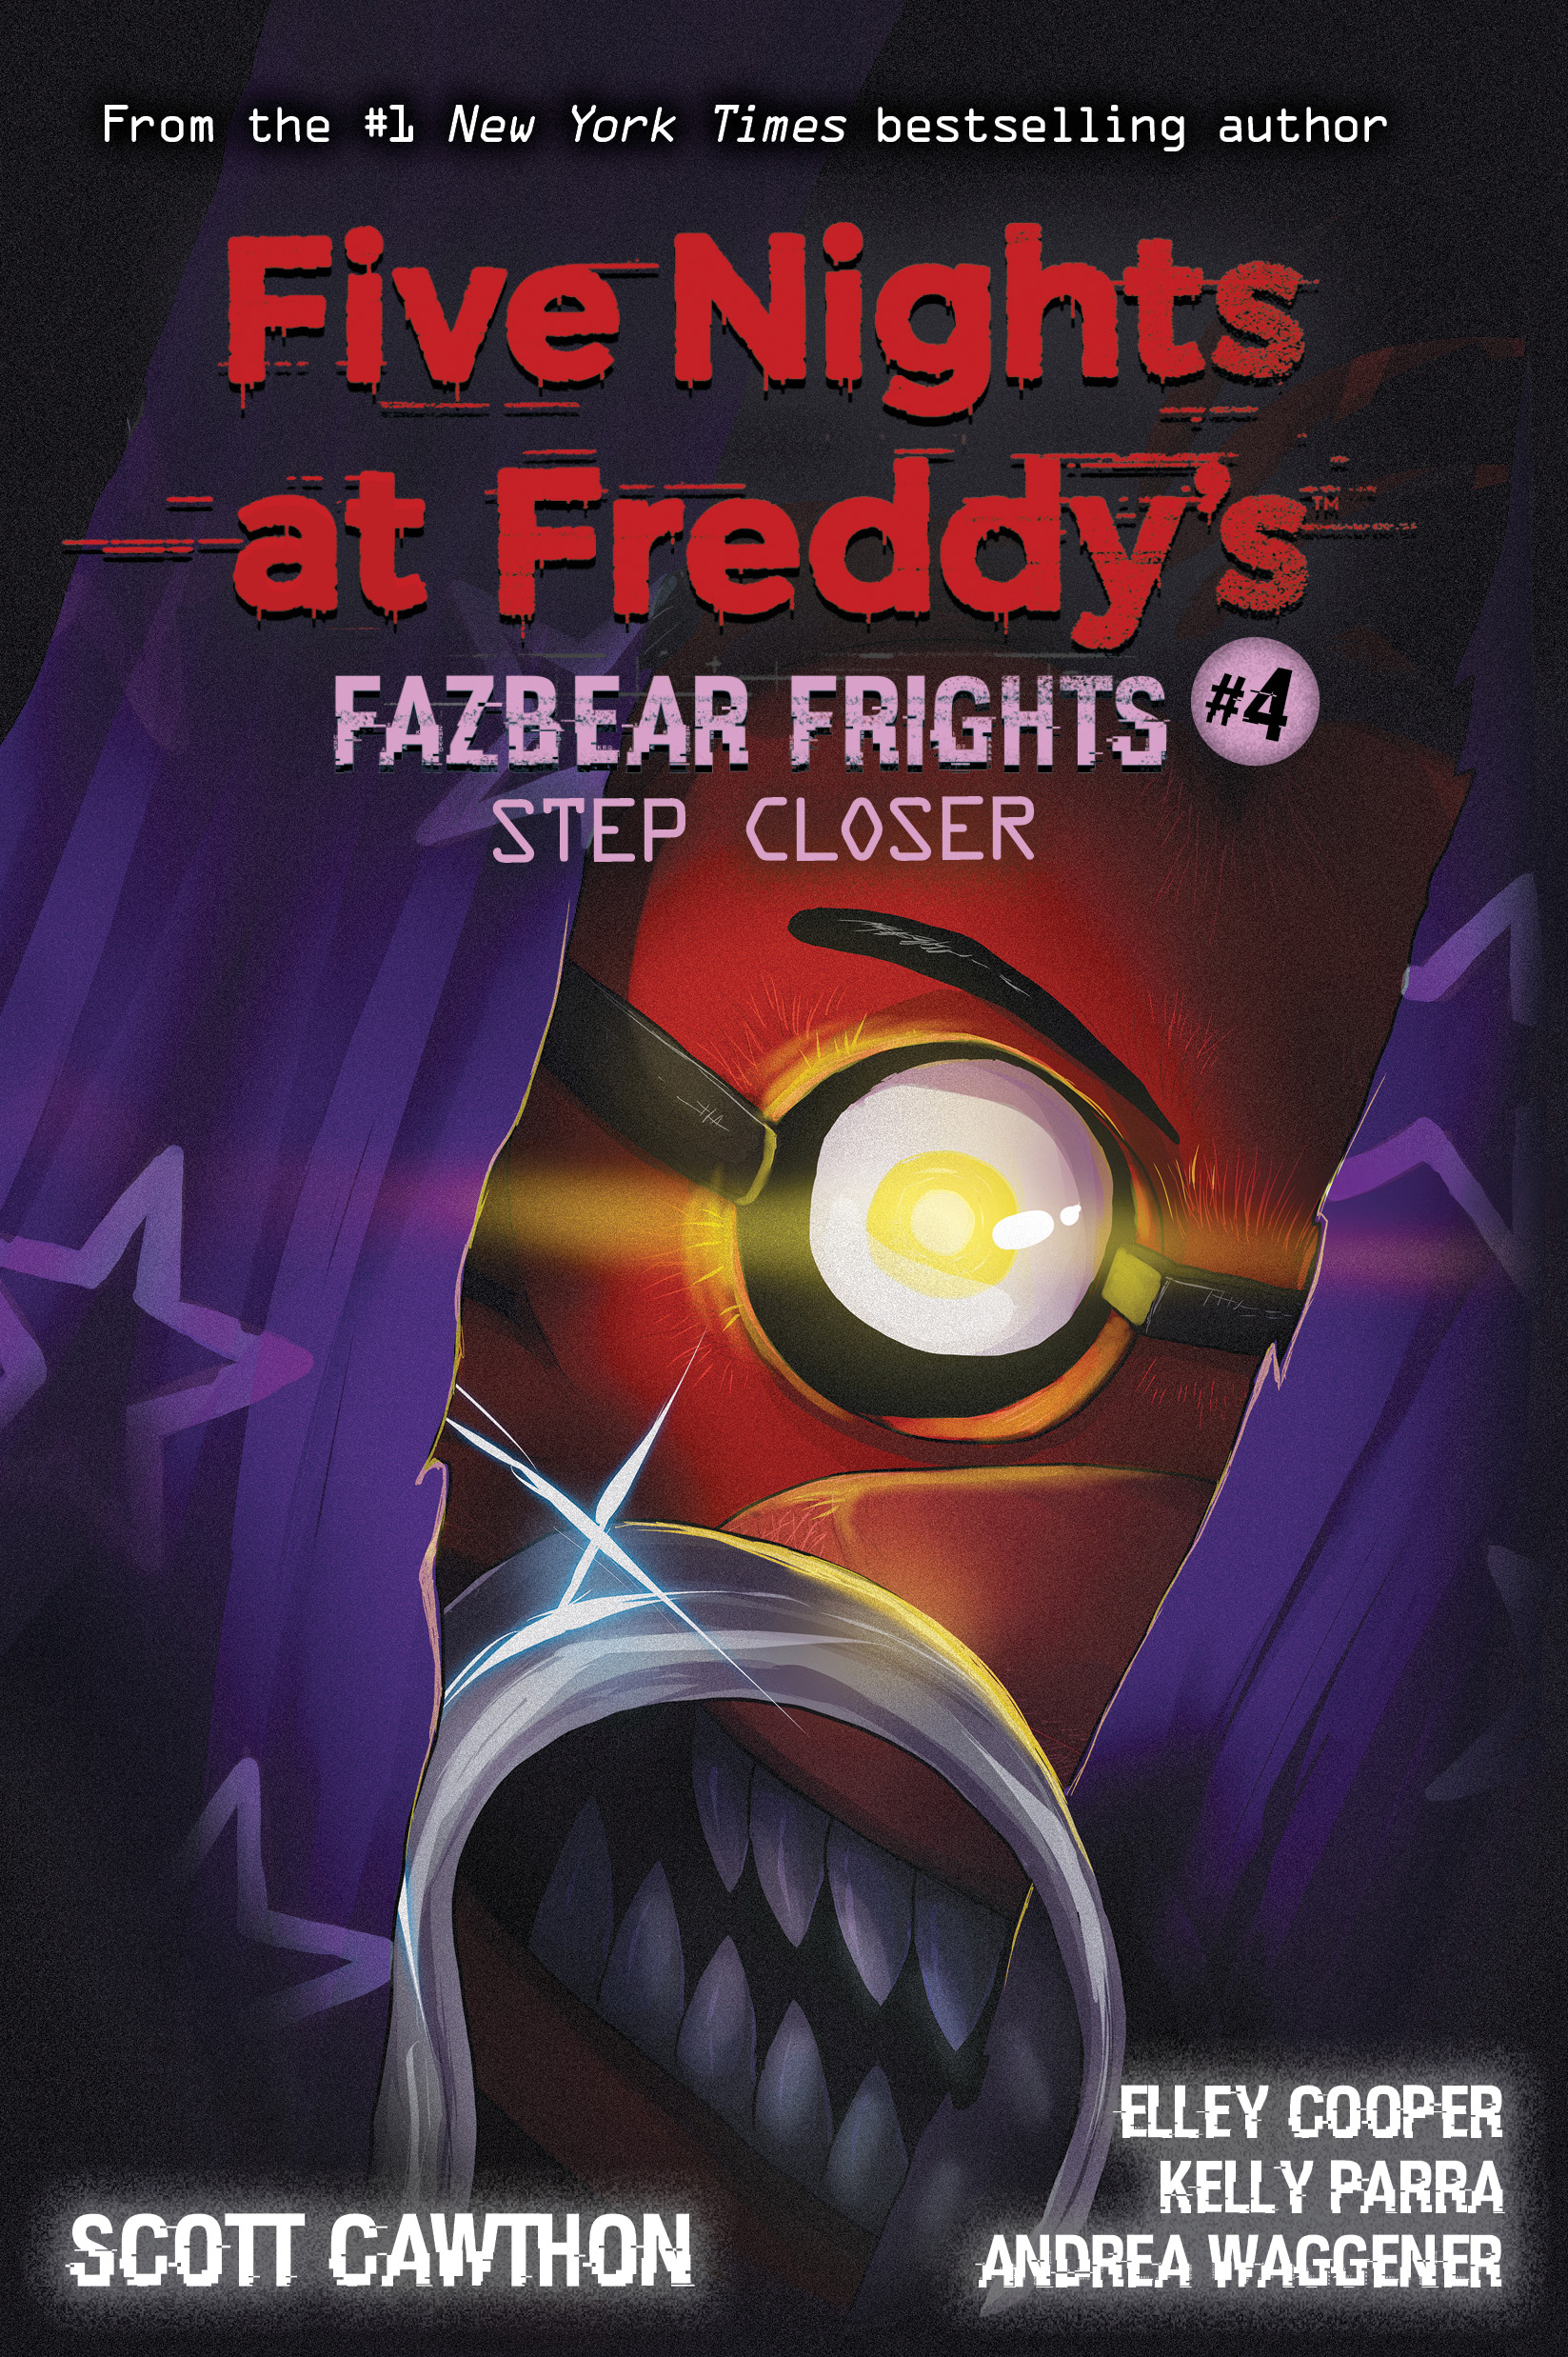 Foxy, Five Nights at Freddy's Wiki